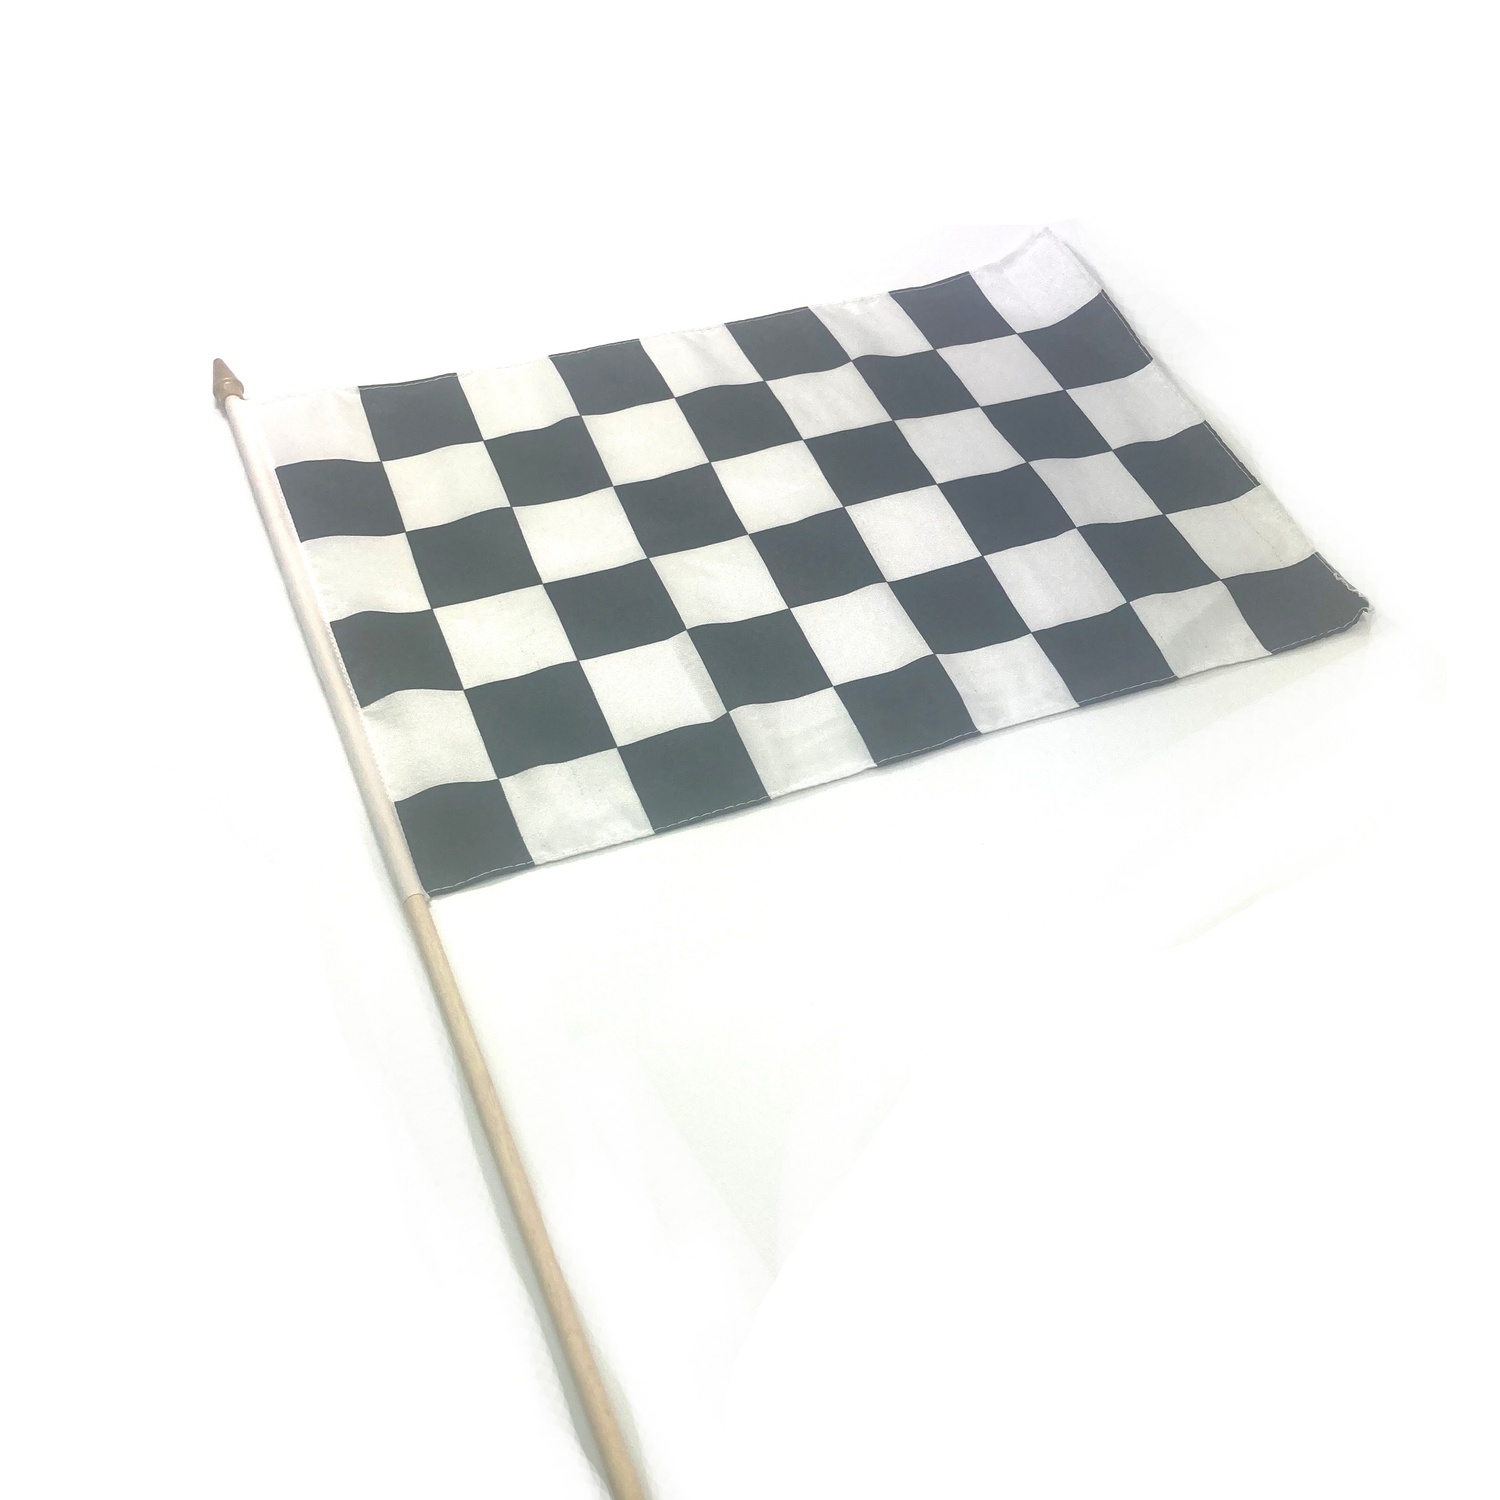 Finish flag on a stick